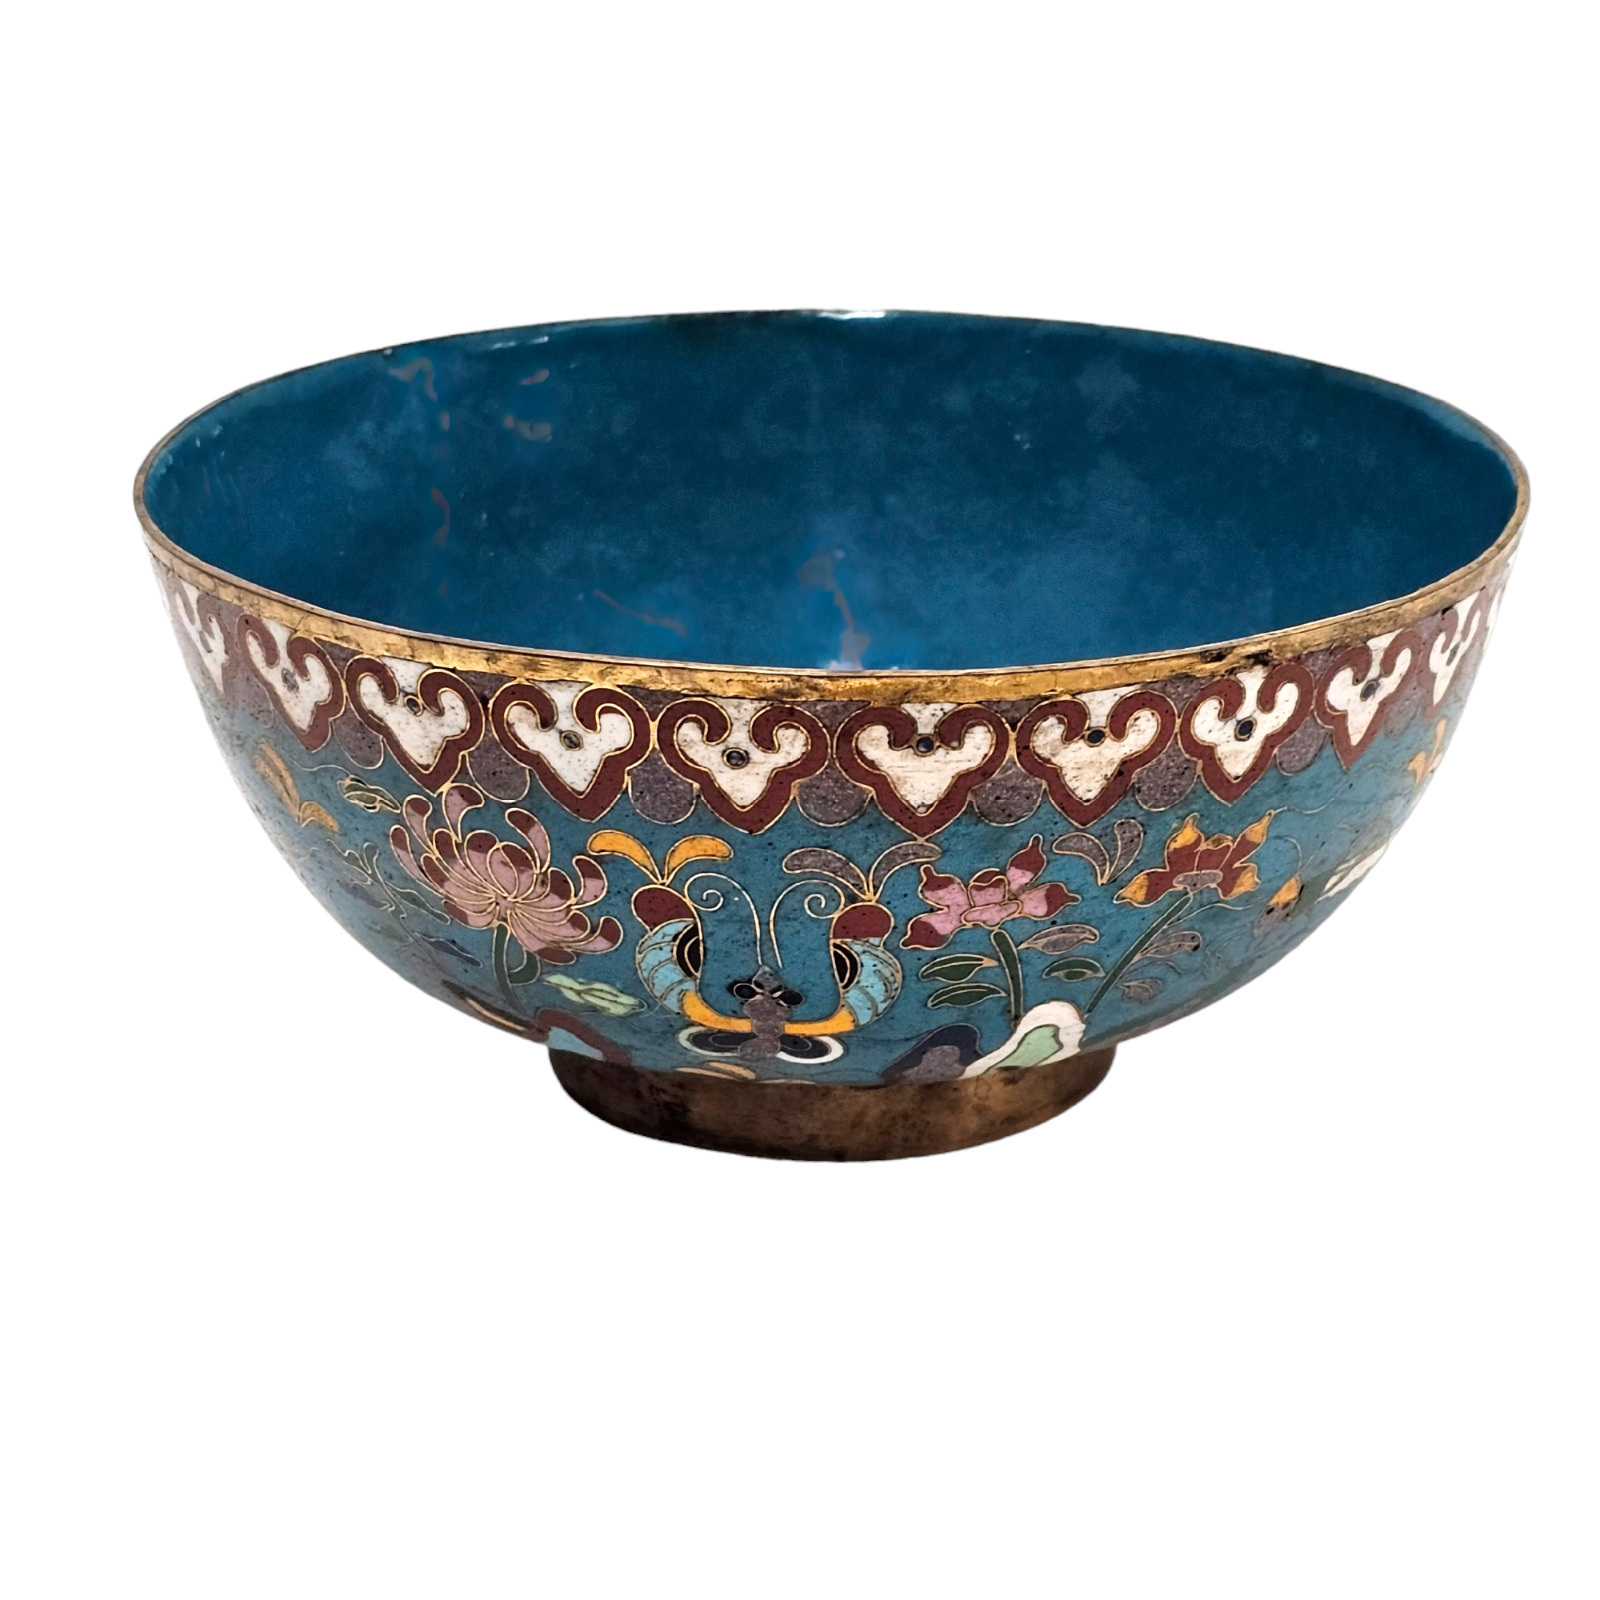 Chinese Cloisonne Bowl Jiaqing Period Metal Enamel Blue China 18th-19th Century